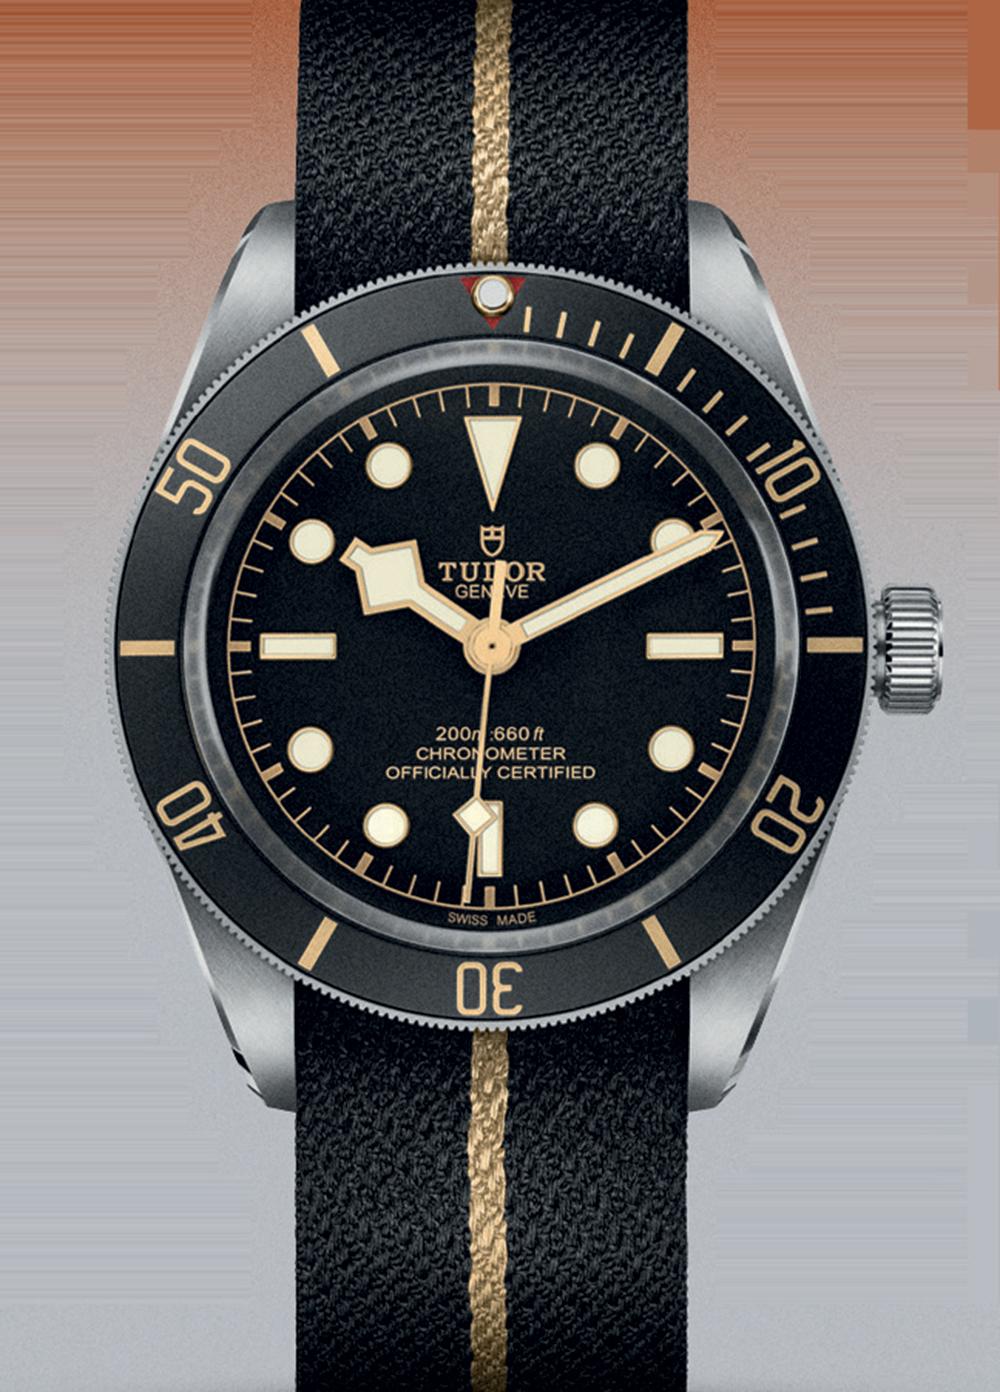 watch wallpaper,watch,analog watch,watch accessory,fashion accessory,strap